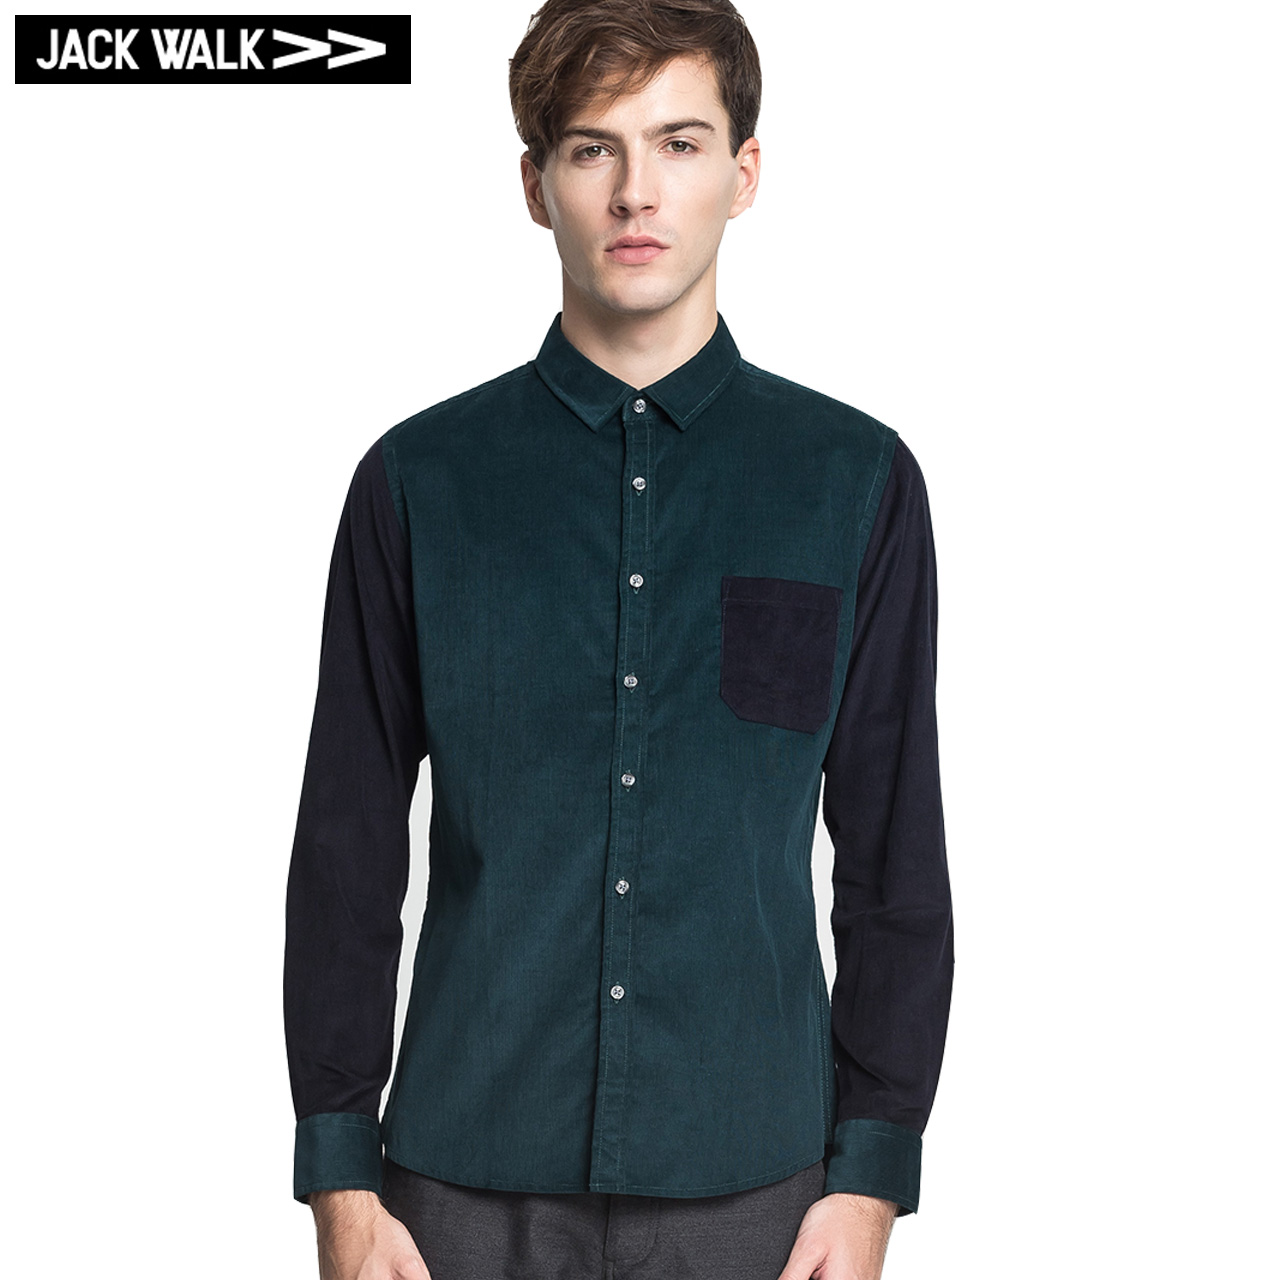 JACK WALK杰克沃克 男装灯芯绒小尖领异色袖修身版衬衫 K0143034